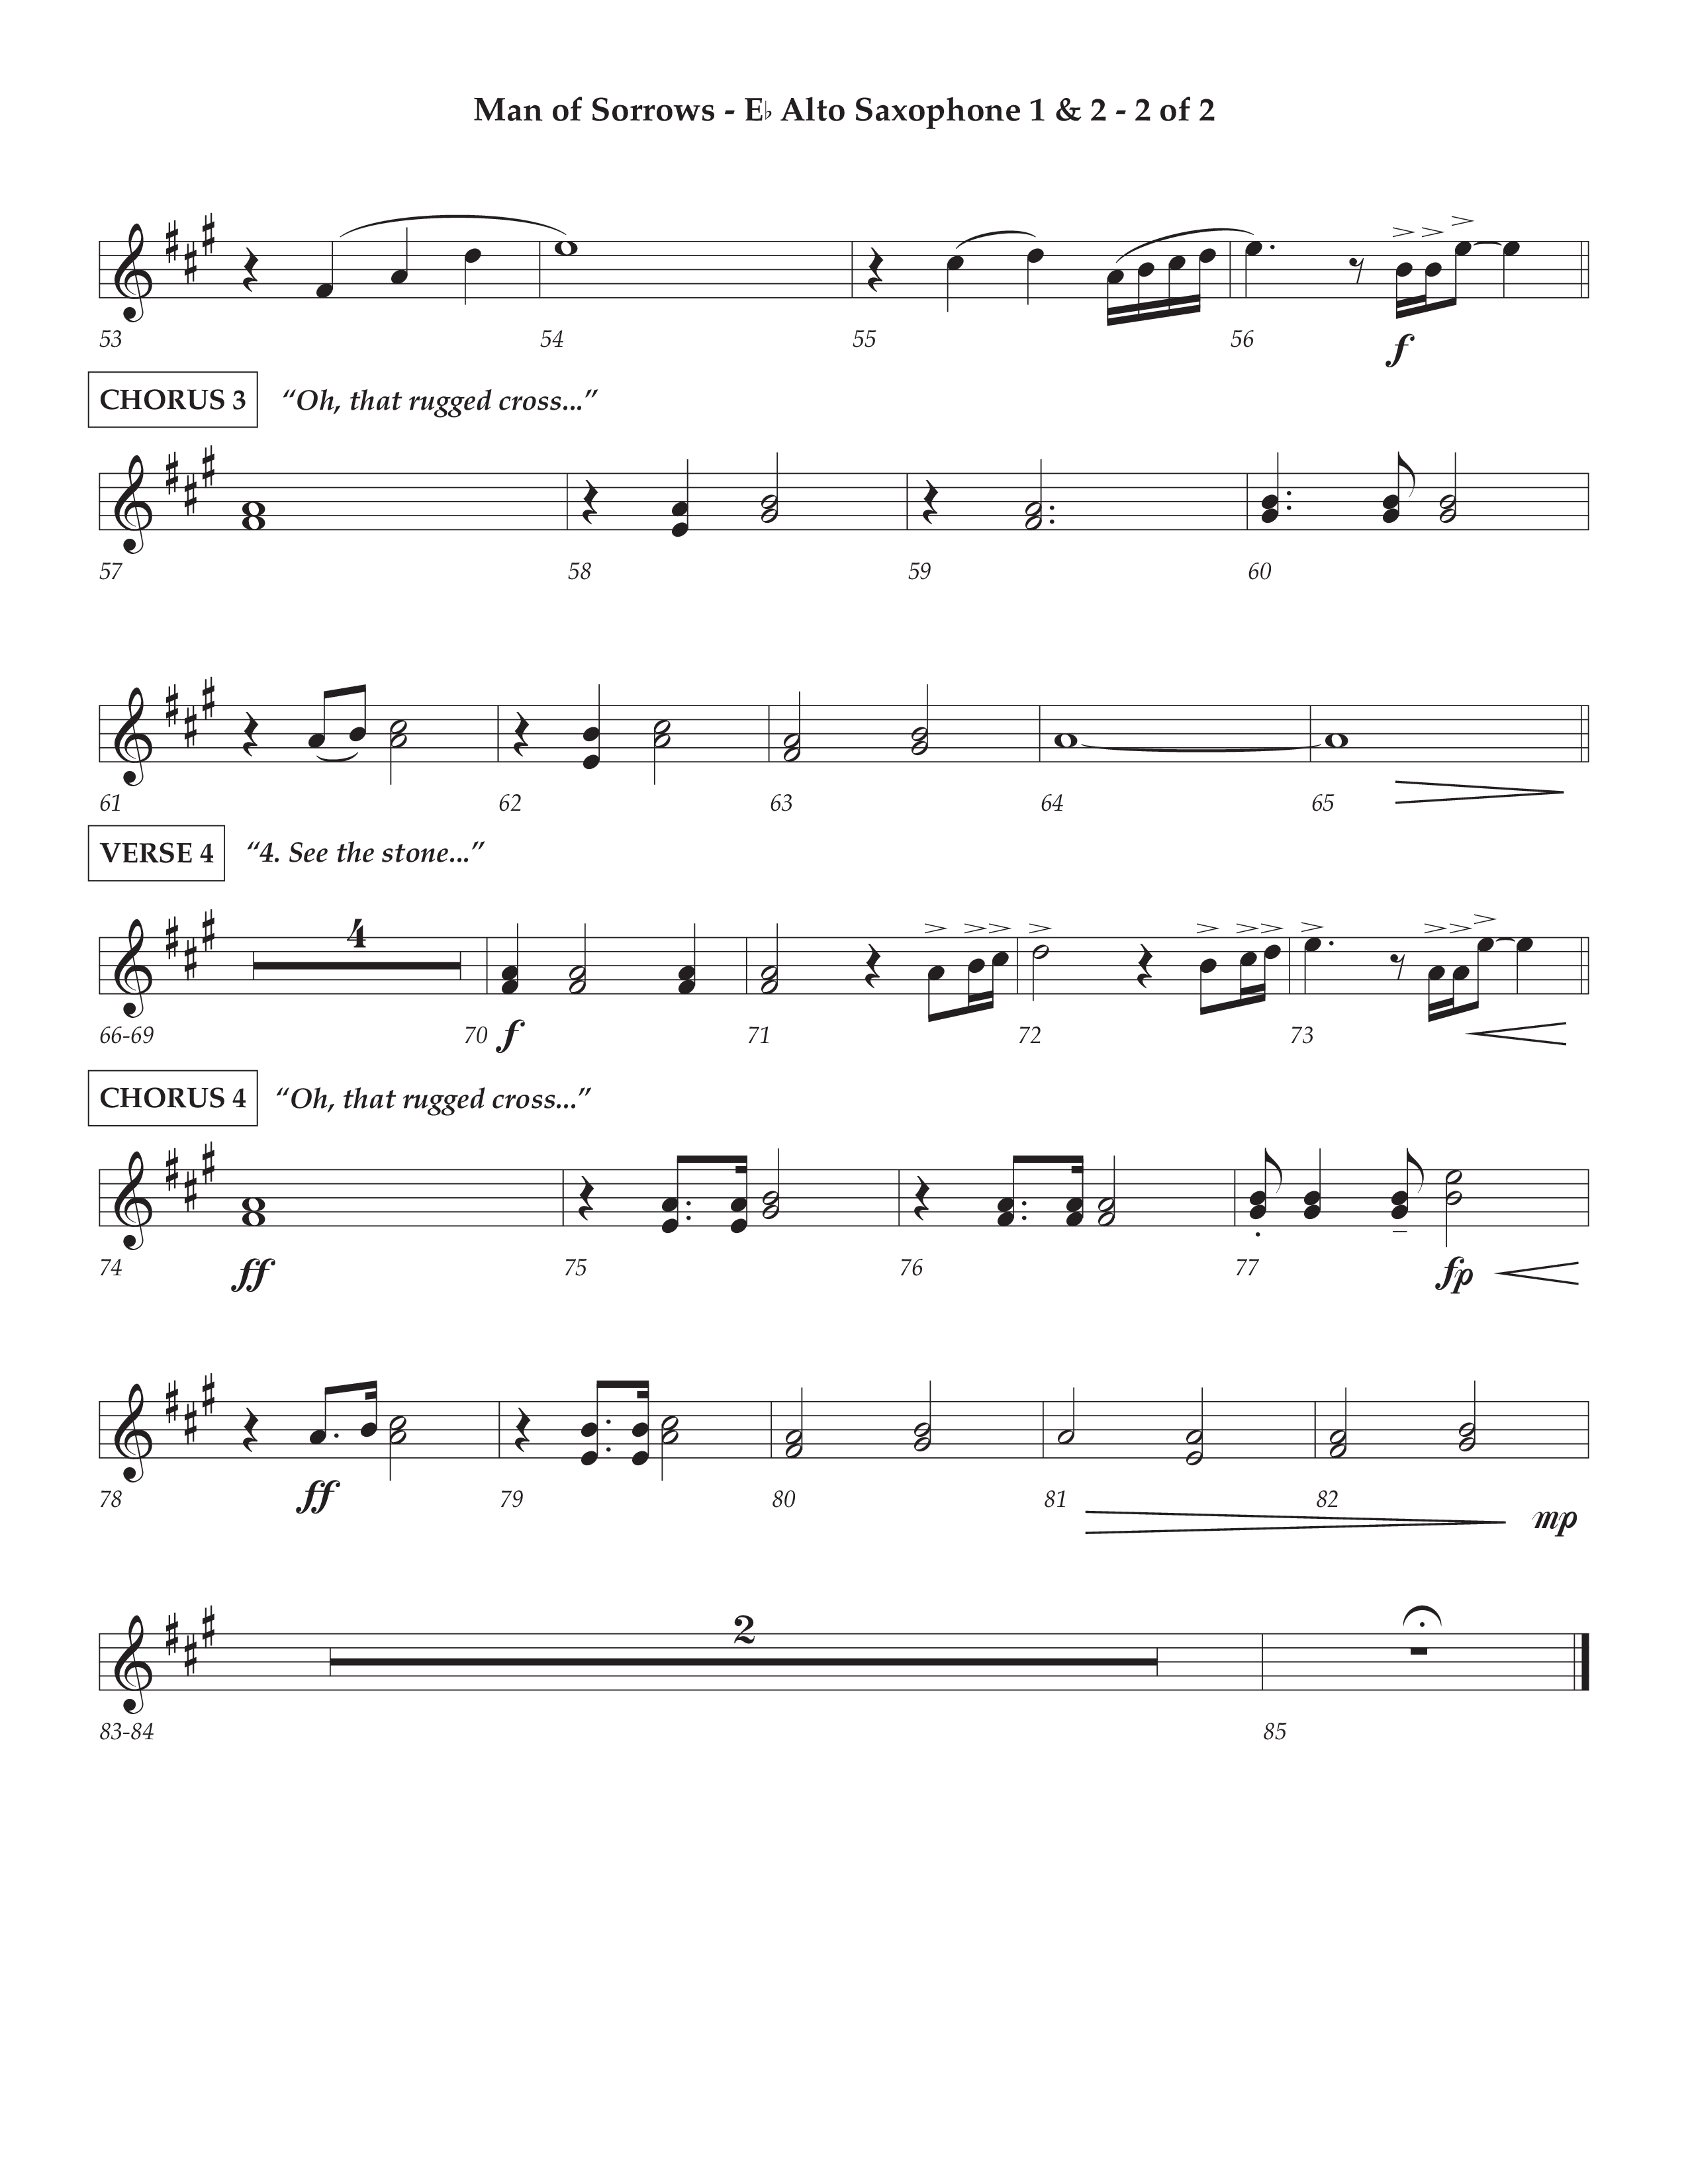 Man Of Sorrows (Choral Anthem SATB) Alto Sax 1/2 (Lifeway Choral / Arr. Cliff Duren / Orch. Keith Christopher)